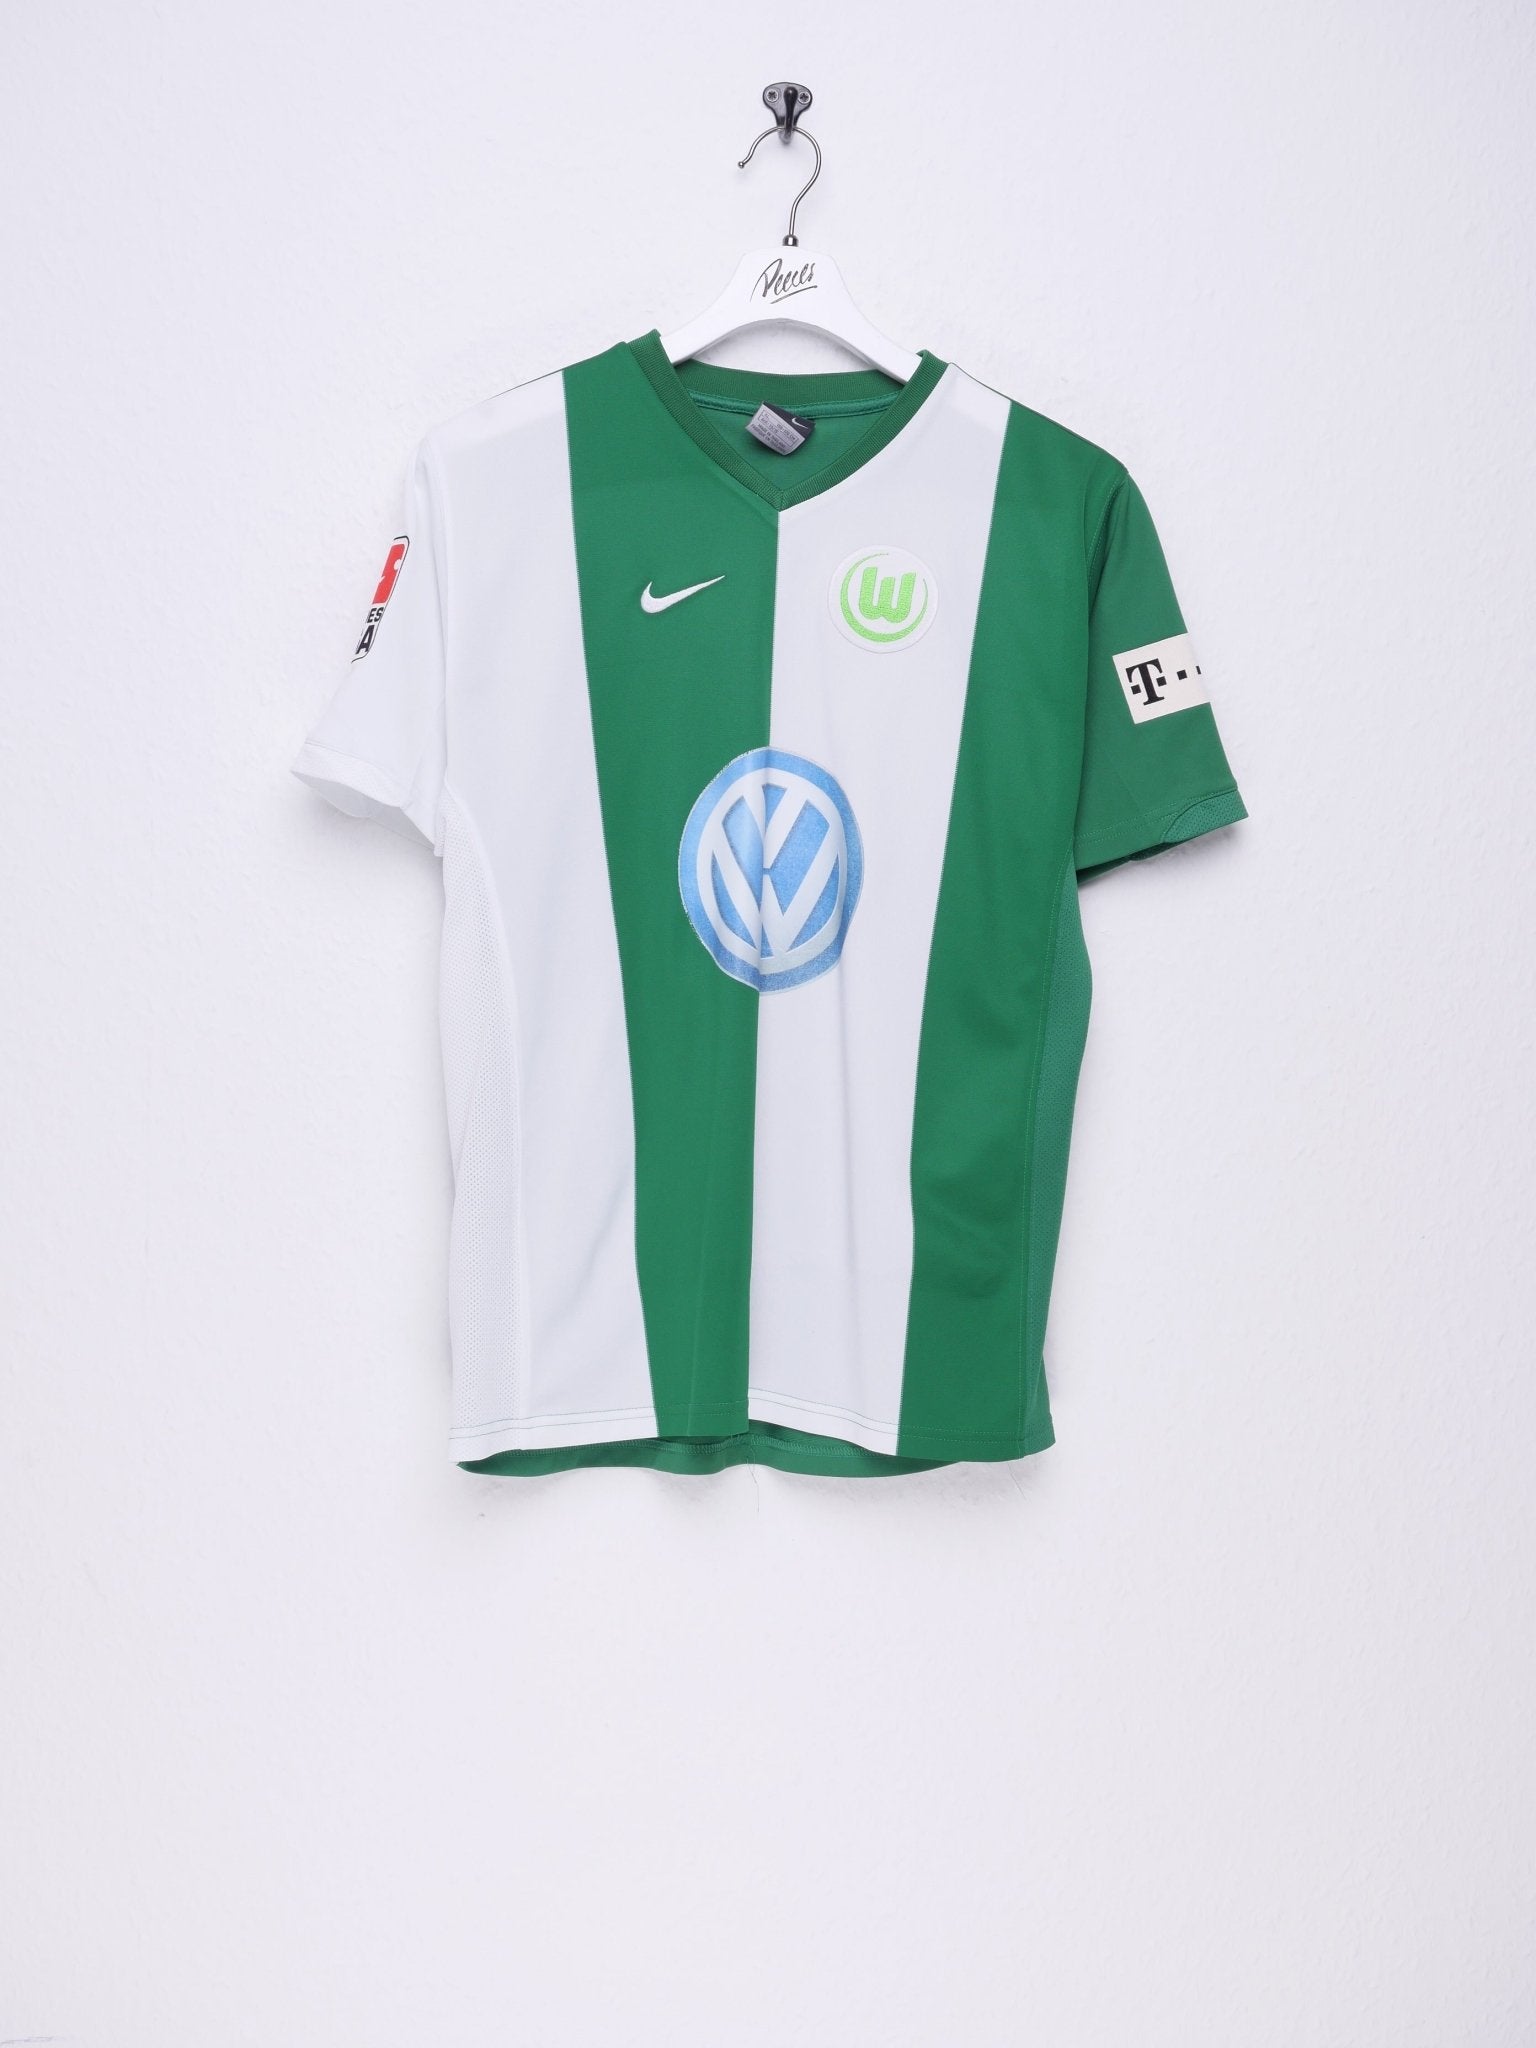 nike embroidered Logo 'Wolfsburg' Bundesliga Soccer Jersey Shirt - Peeces